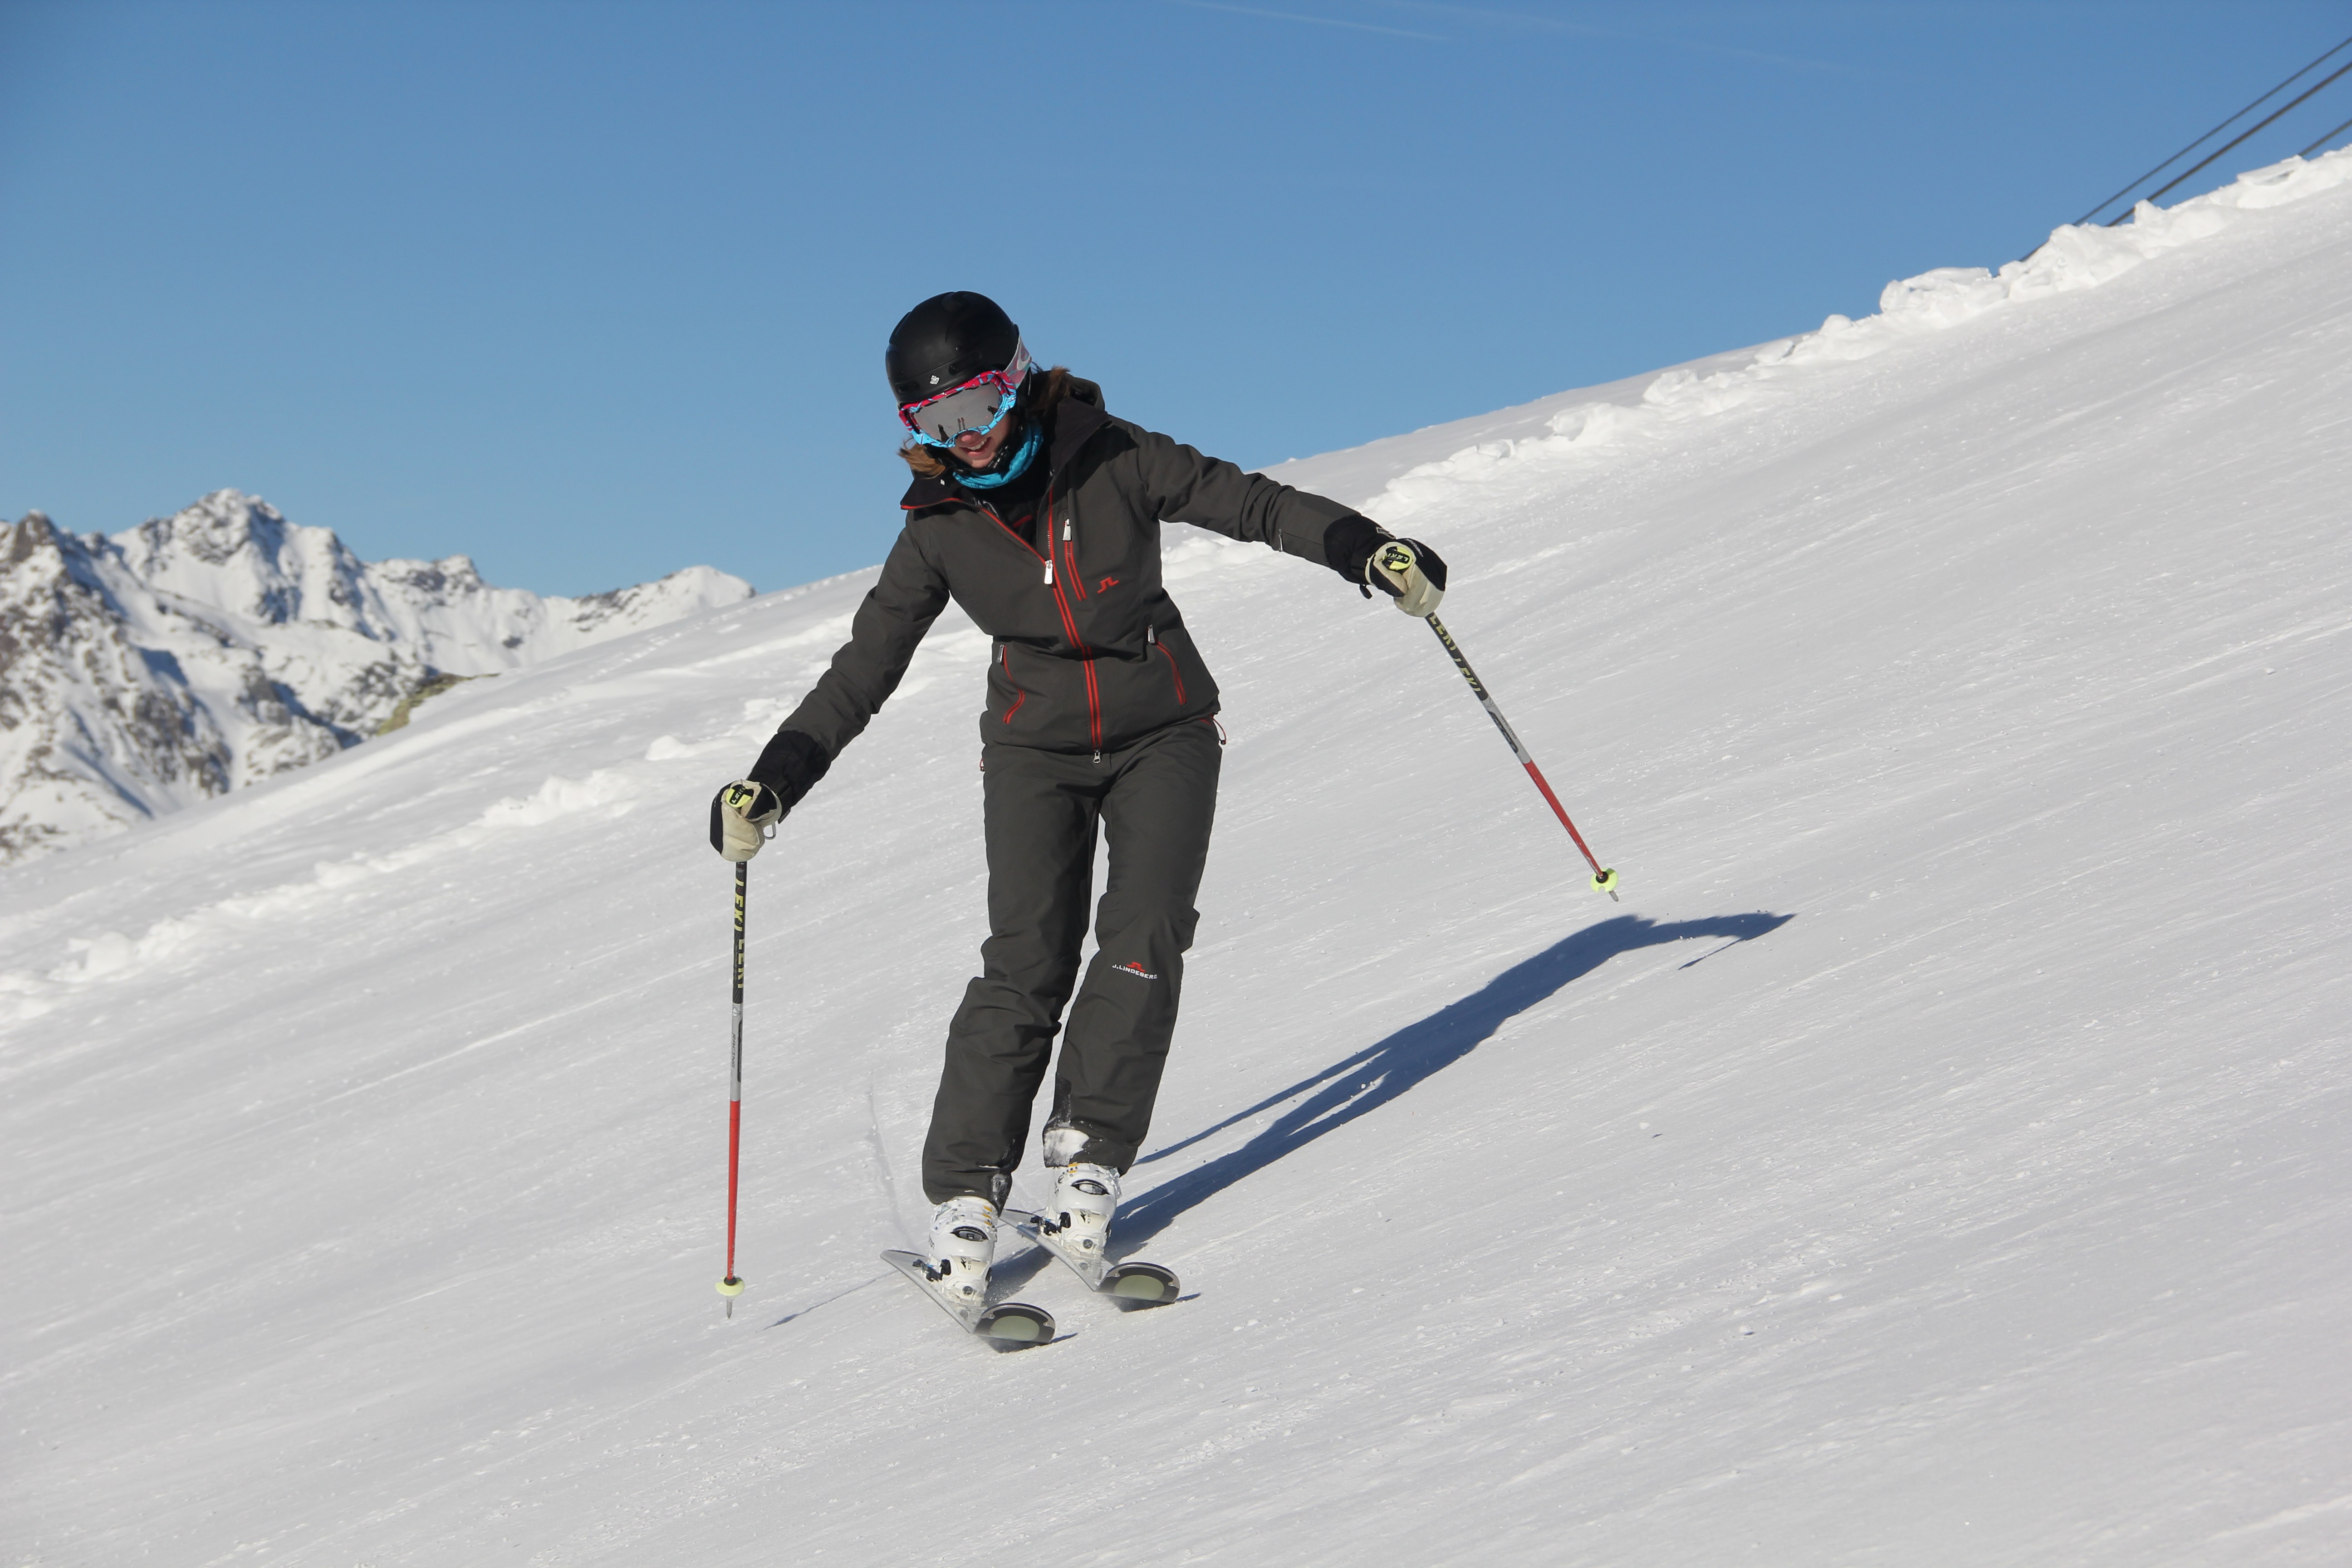 Parallel Skiing finally no more snow polw. Tips, exercises, common ...